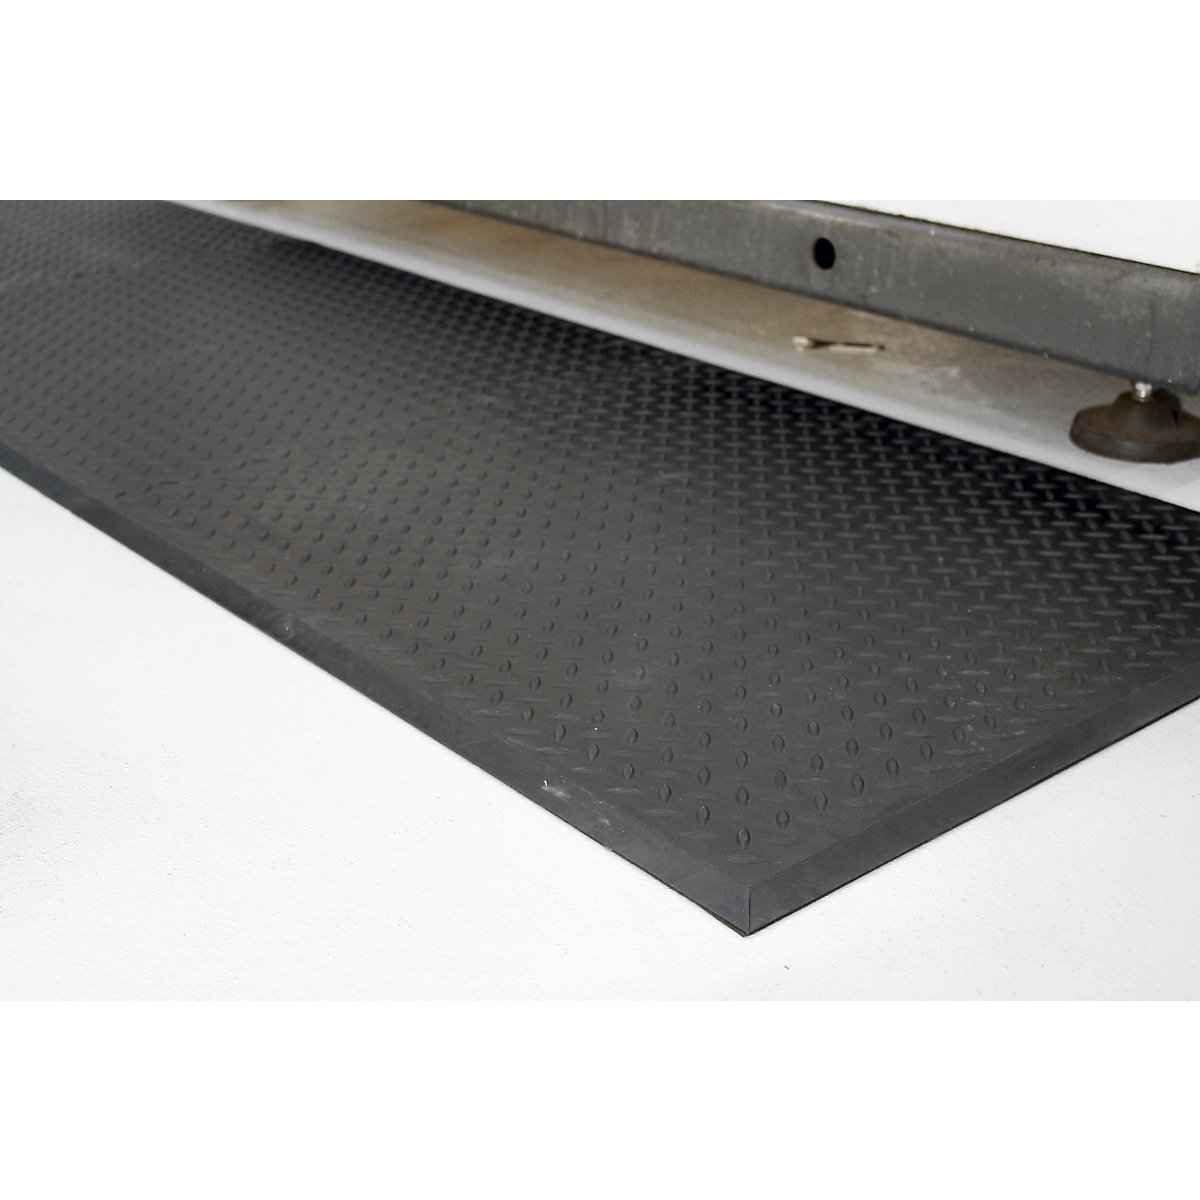 Comfort-Lok anti-fatigue matting – COBA, natural rubber, edge mat, LxW 800 x 700 mm, pack of 2-3